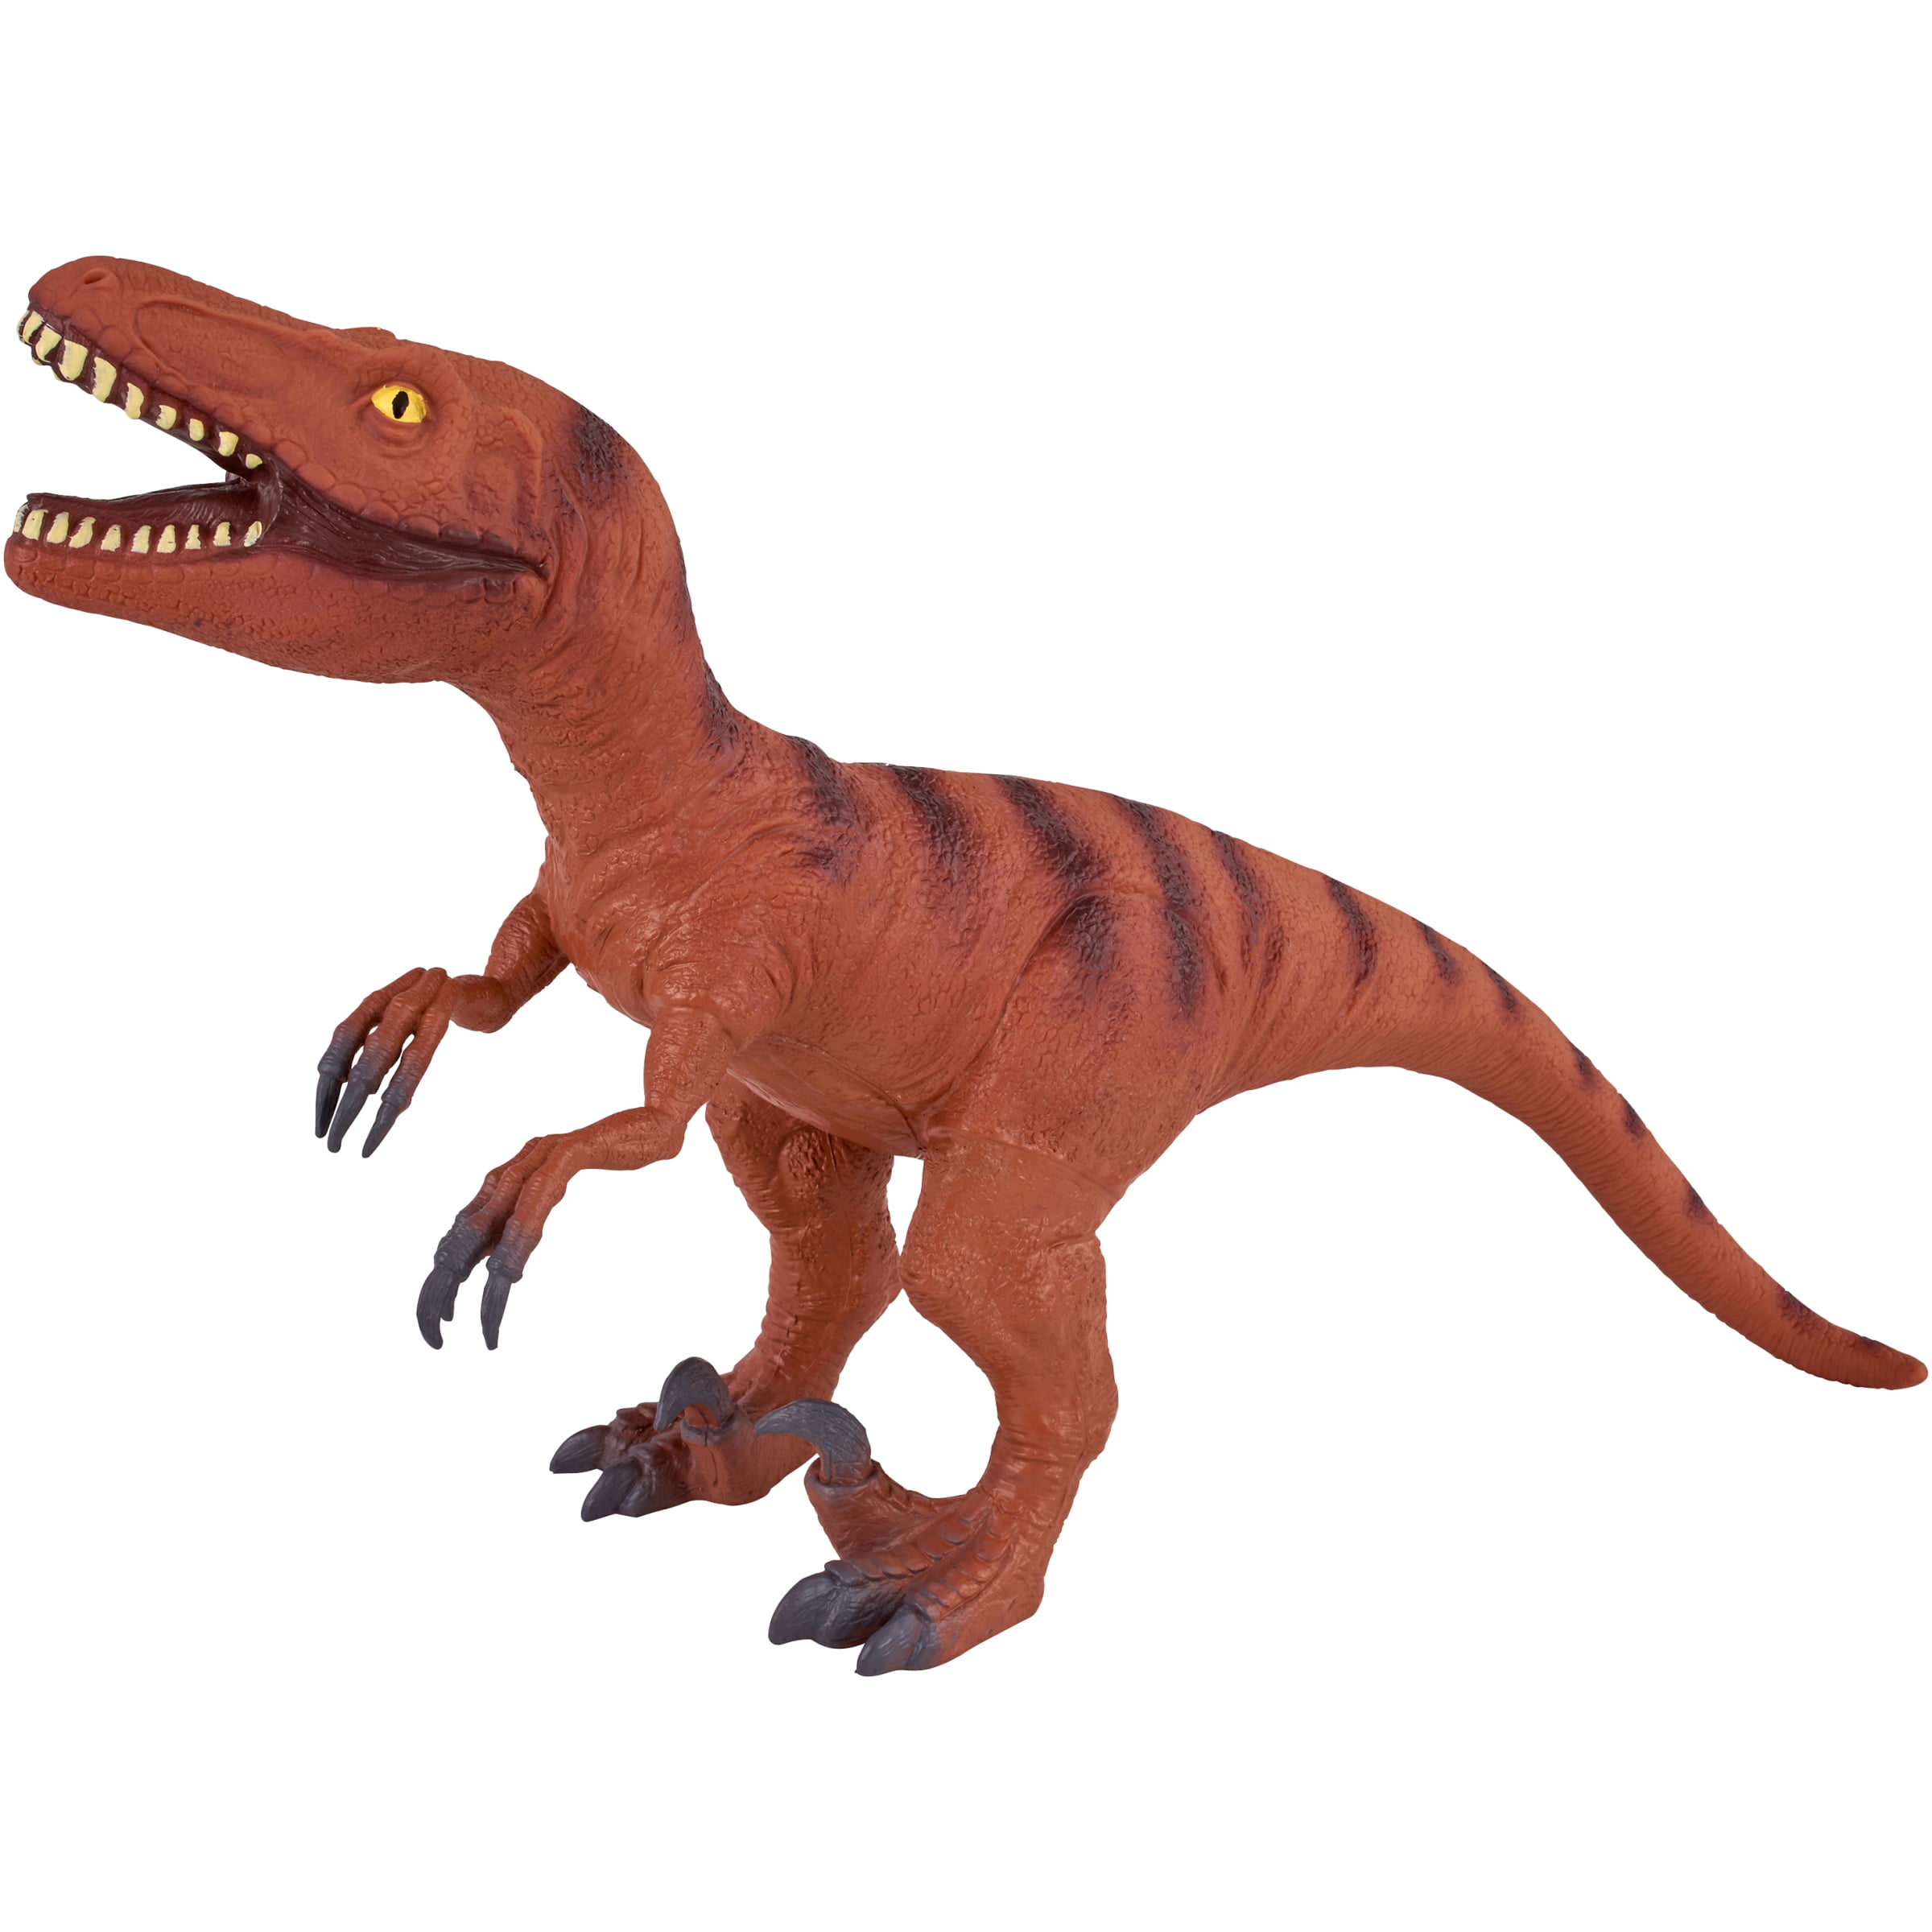 Adventure Force Soft Raptor Dinosaur Toy Red Designed For Ages 3 And Up Brickseek